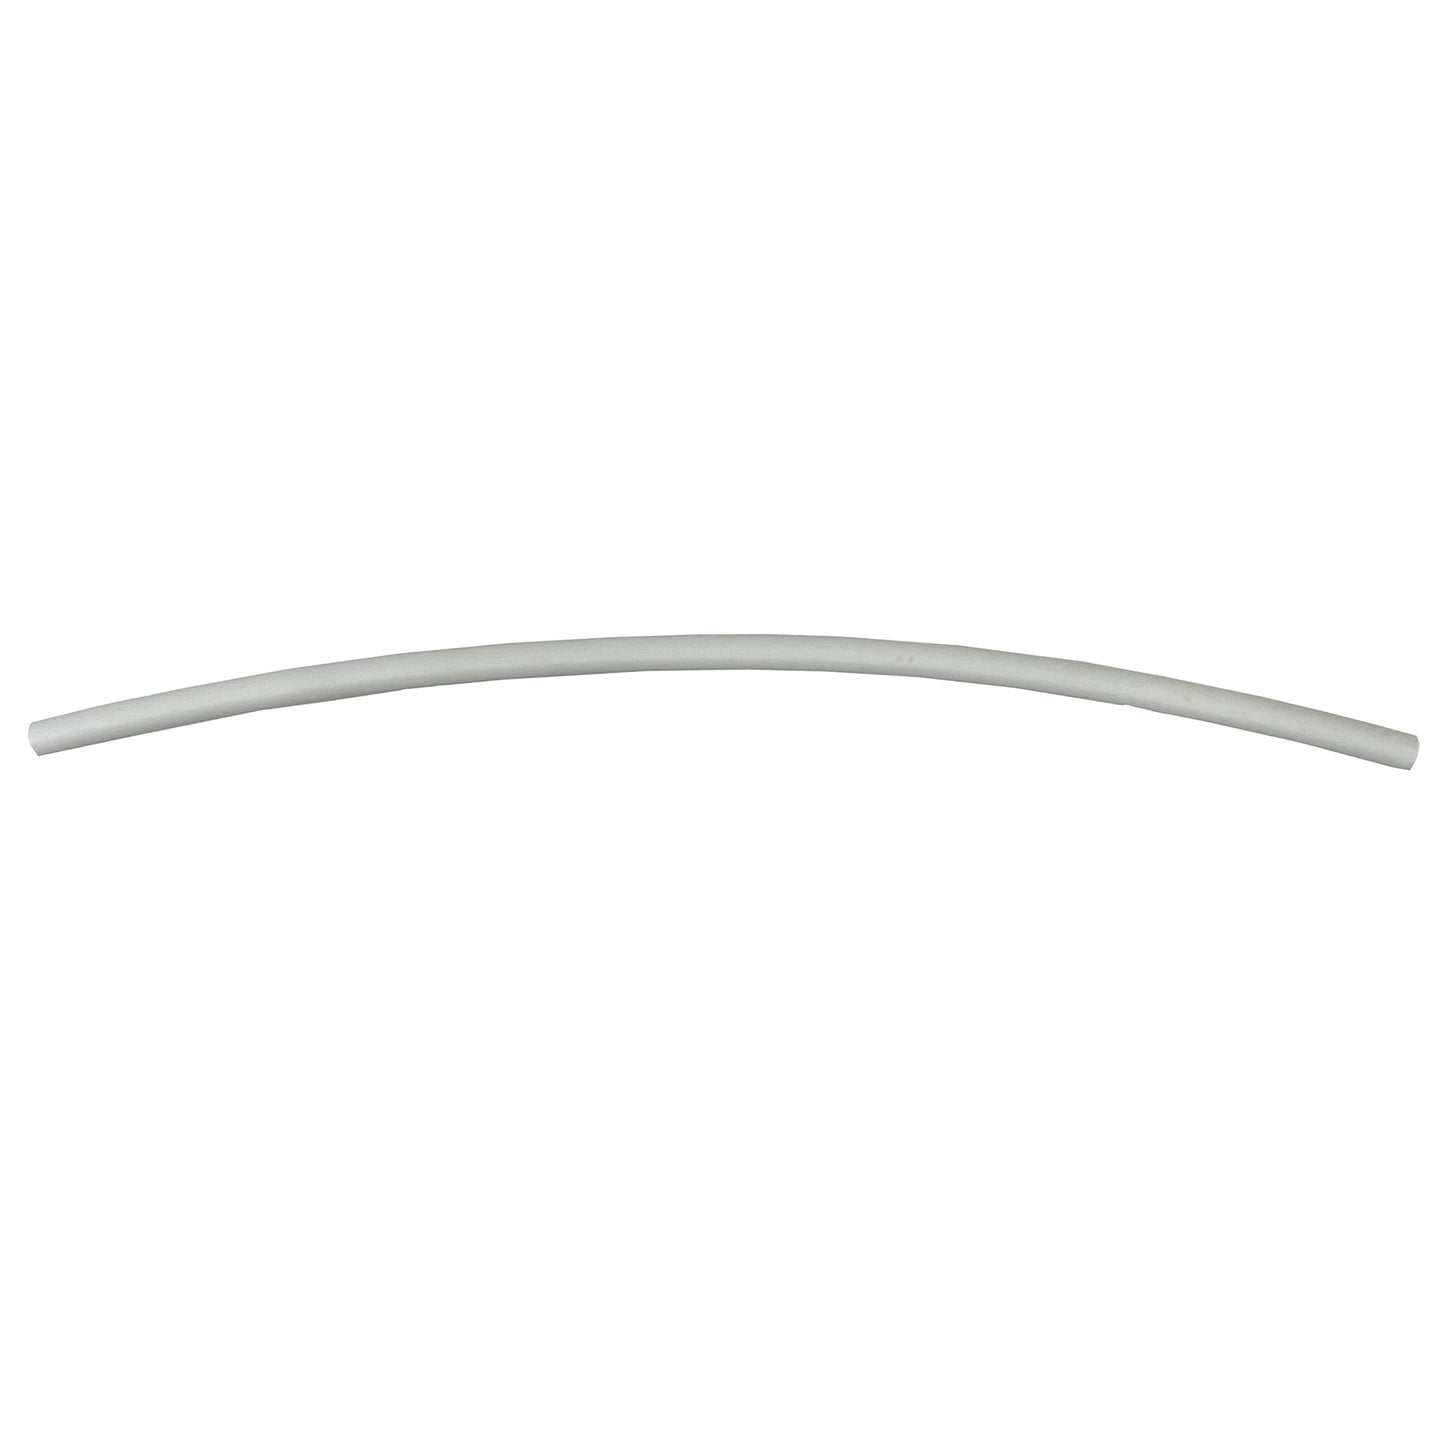 Flexible Thin Single Wall Non-Adhesive Heat Shrink Tubing 2:1 White 1/8" ID - 25' Ft Spool